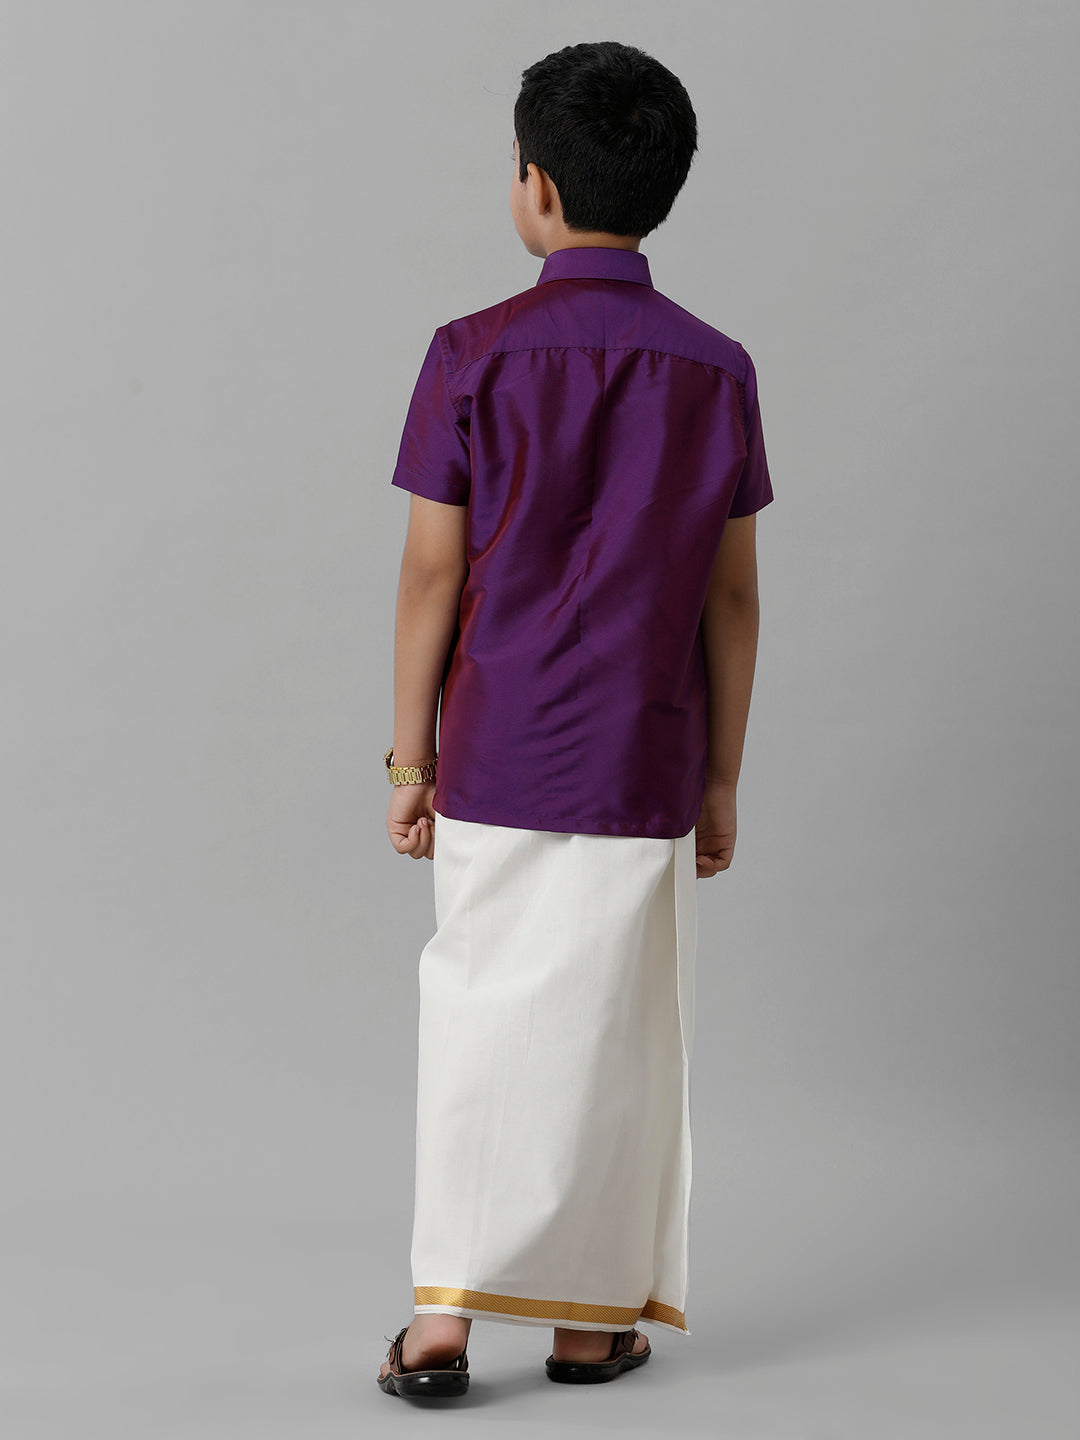 Boys Silk Cotton Violet Half Sleeves Shirt with Adjustable Cream Dhoti Combo K21-Back view